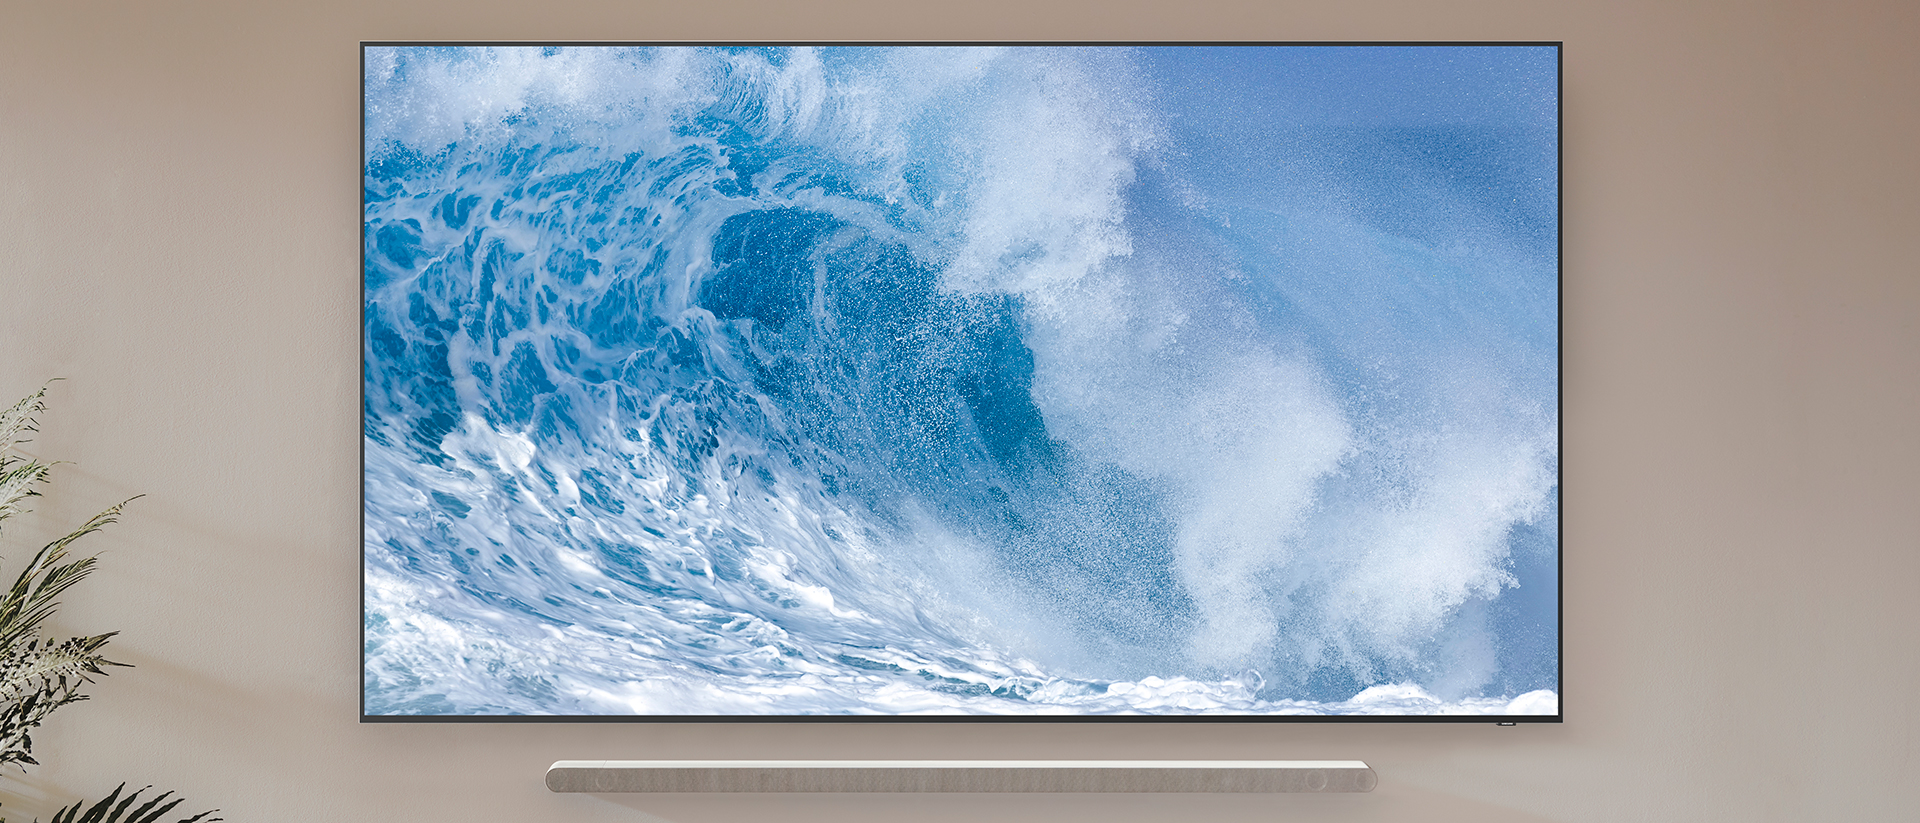 Samsung QN900B Neo QLED 8K TV review | TechRadar